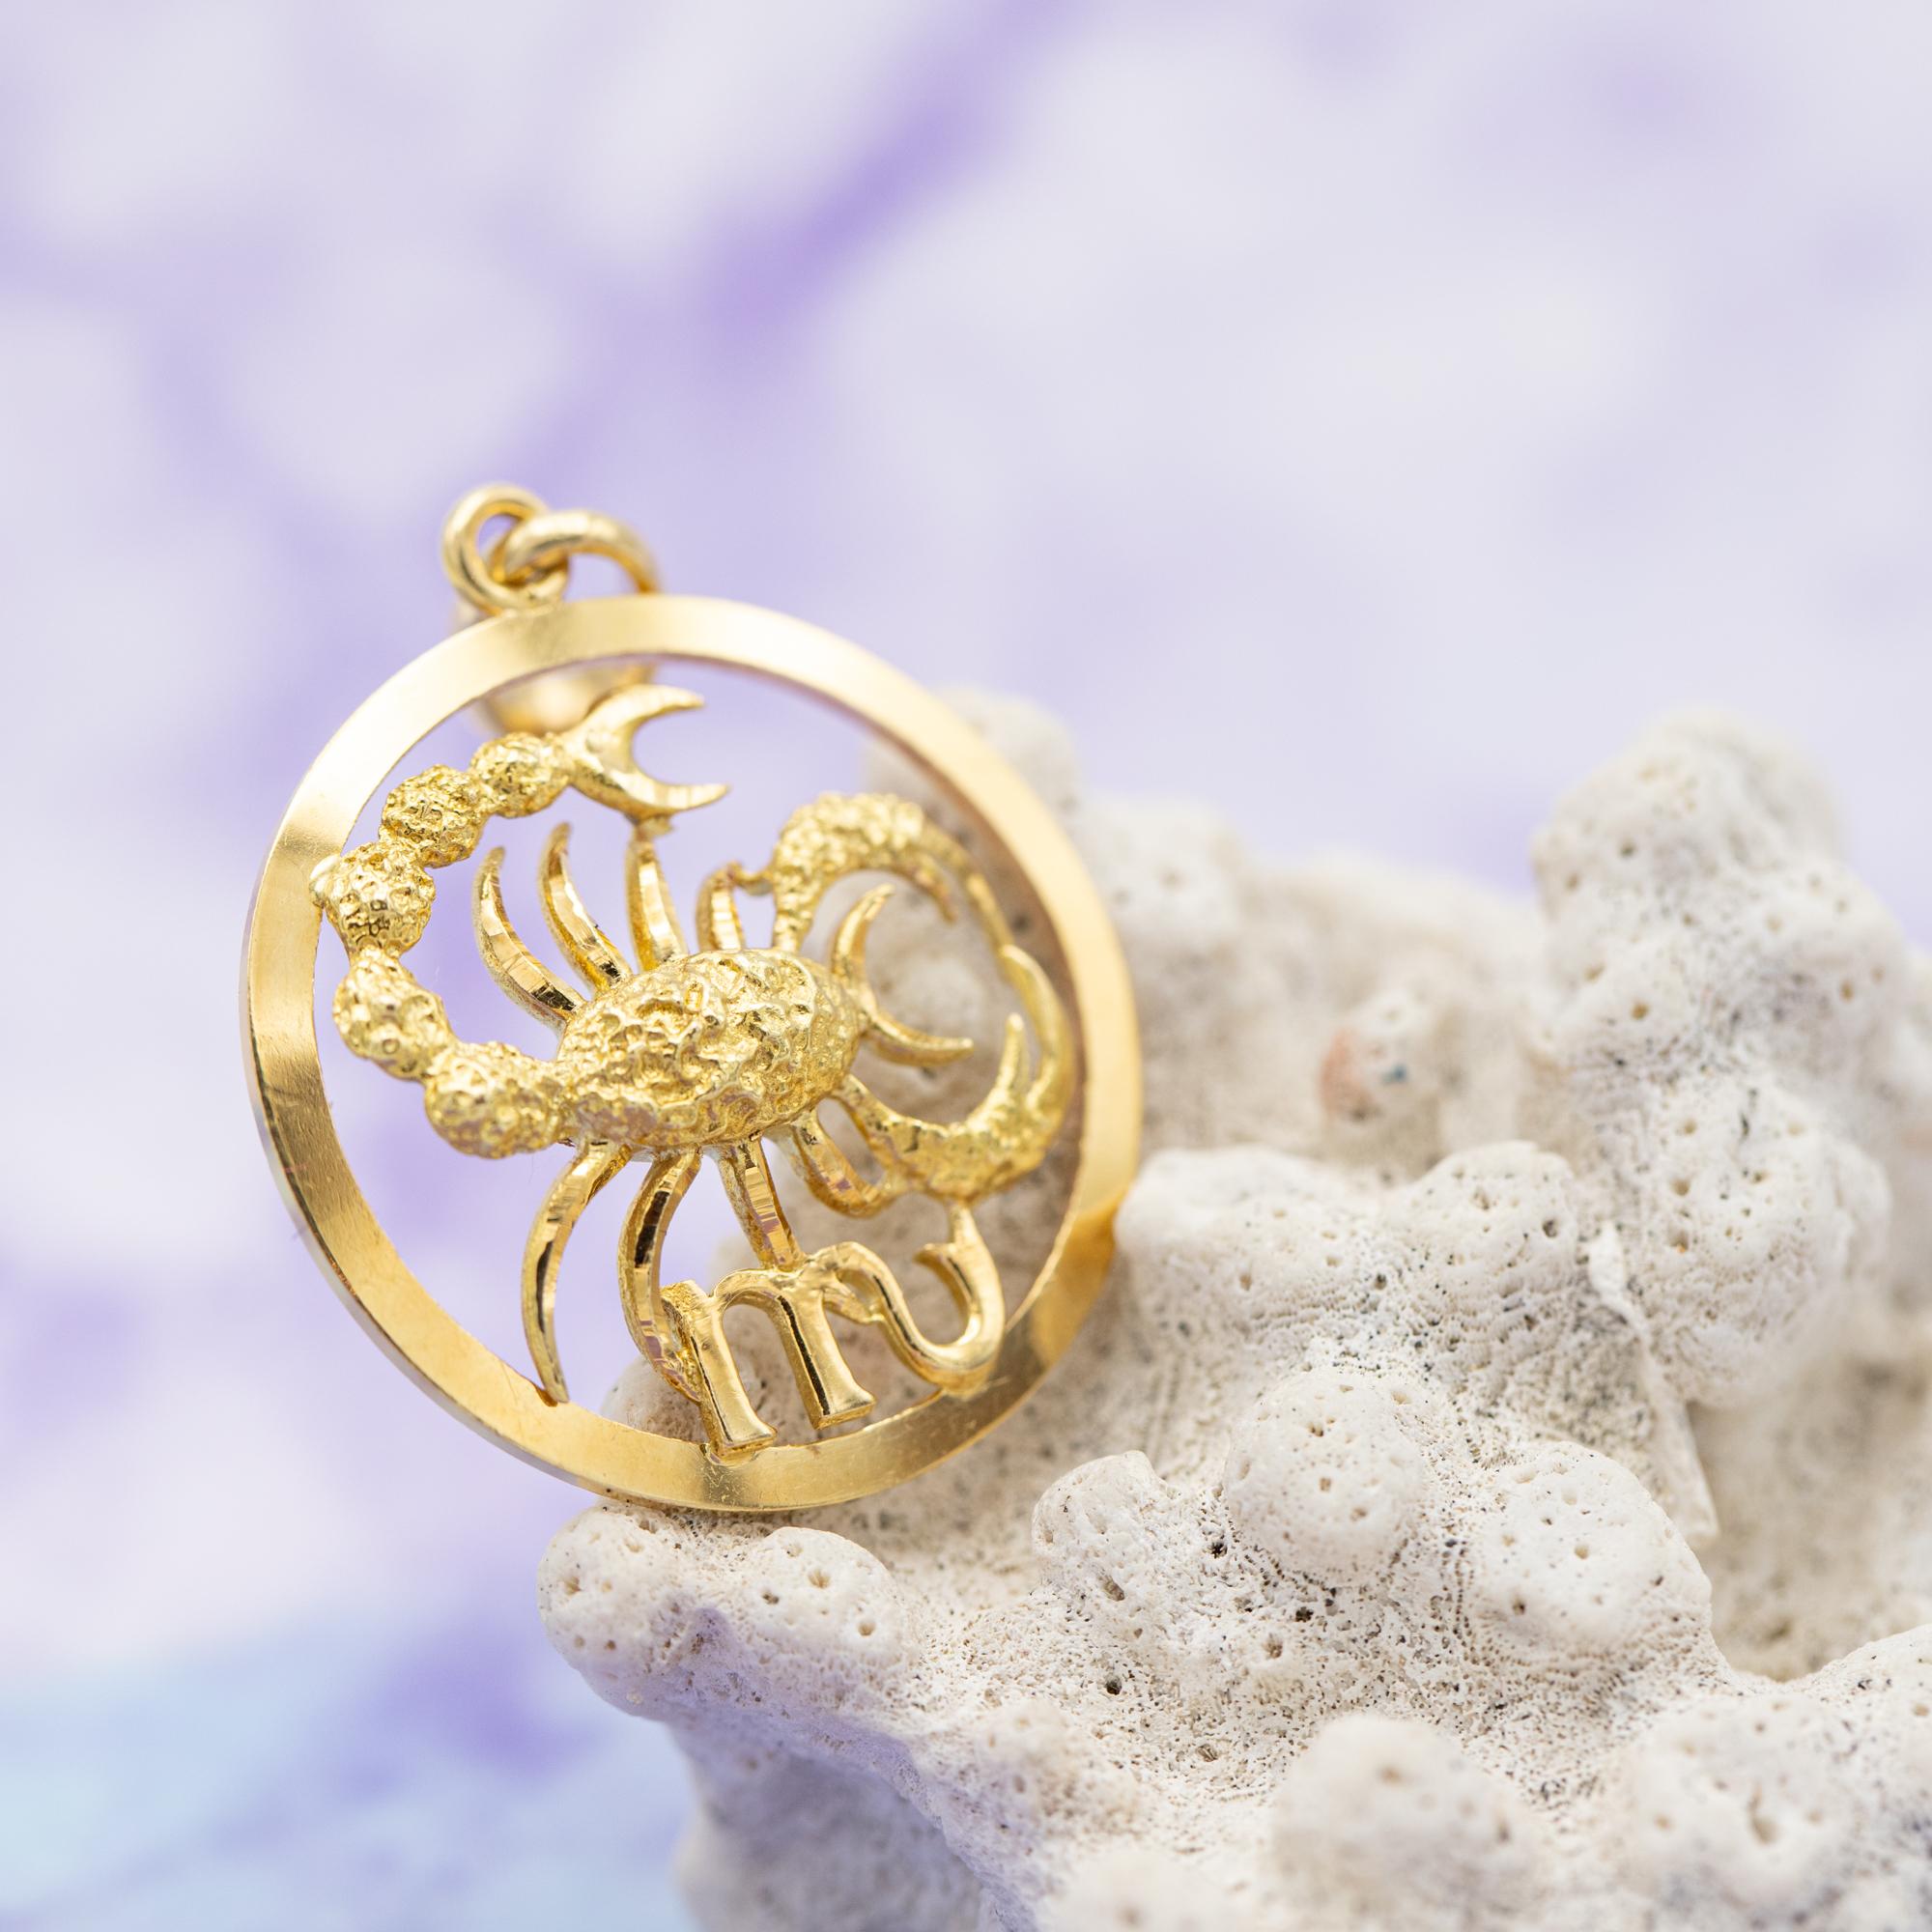 XL Large 18k zodiac charm pendant - Scorpio medallion - solid yellow gold For Sale 3